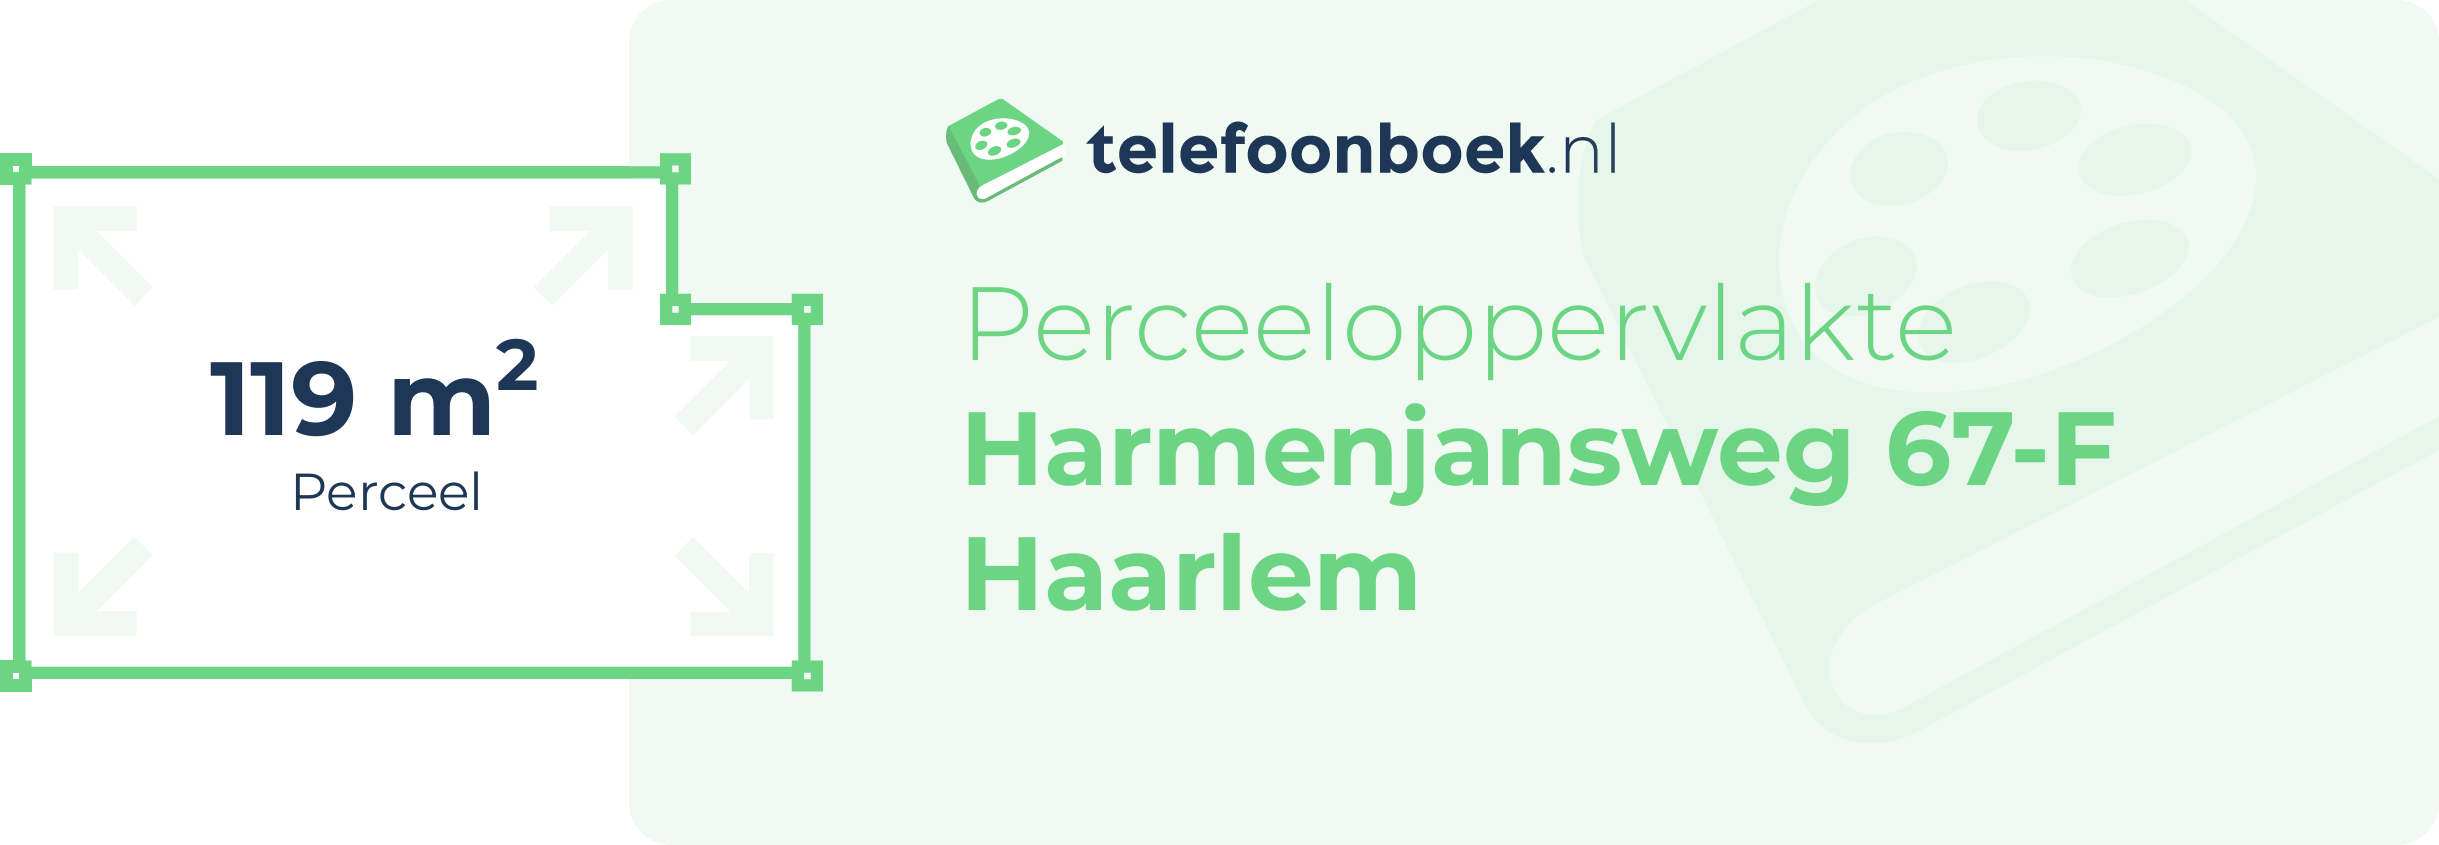 Perceeloppervlakte Harmenjansweg 67-F Haarlem